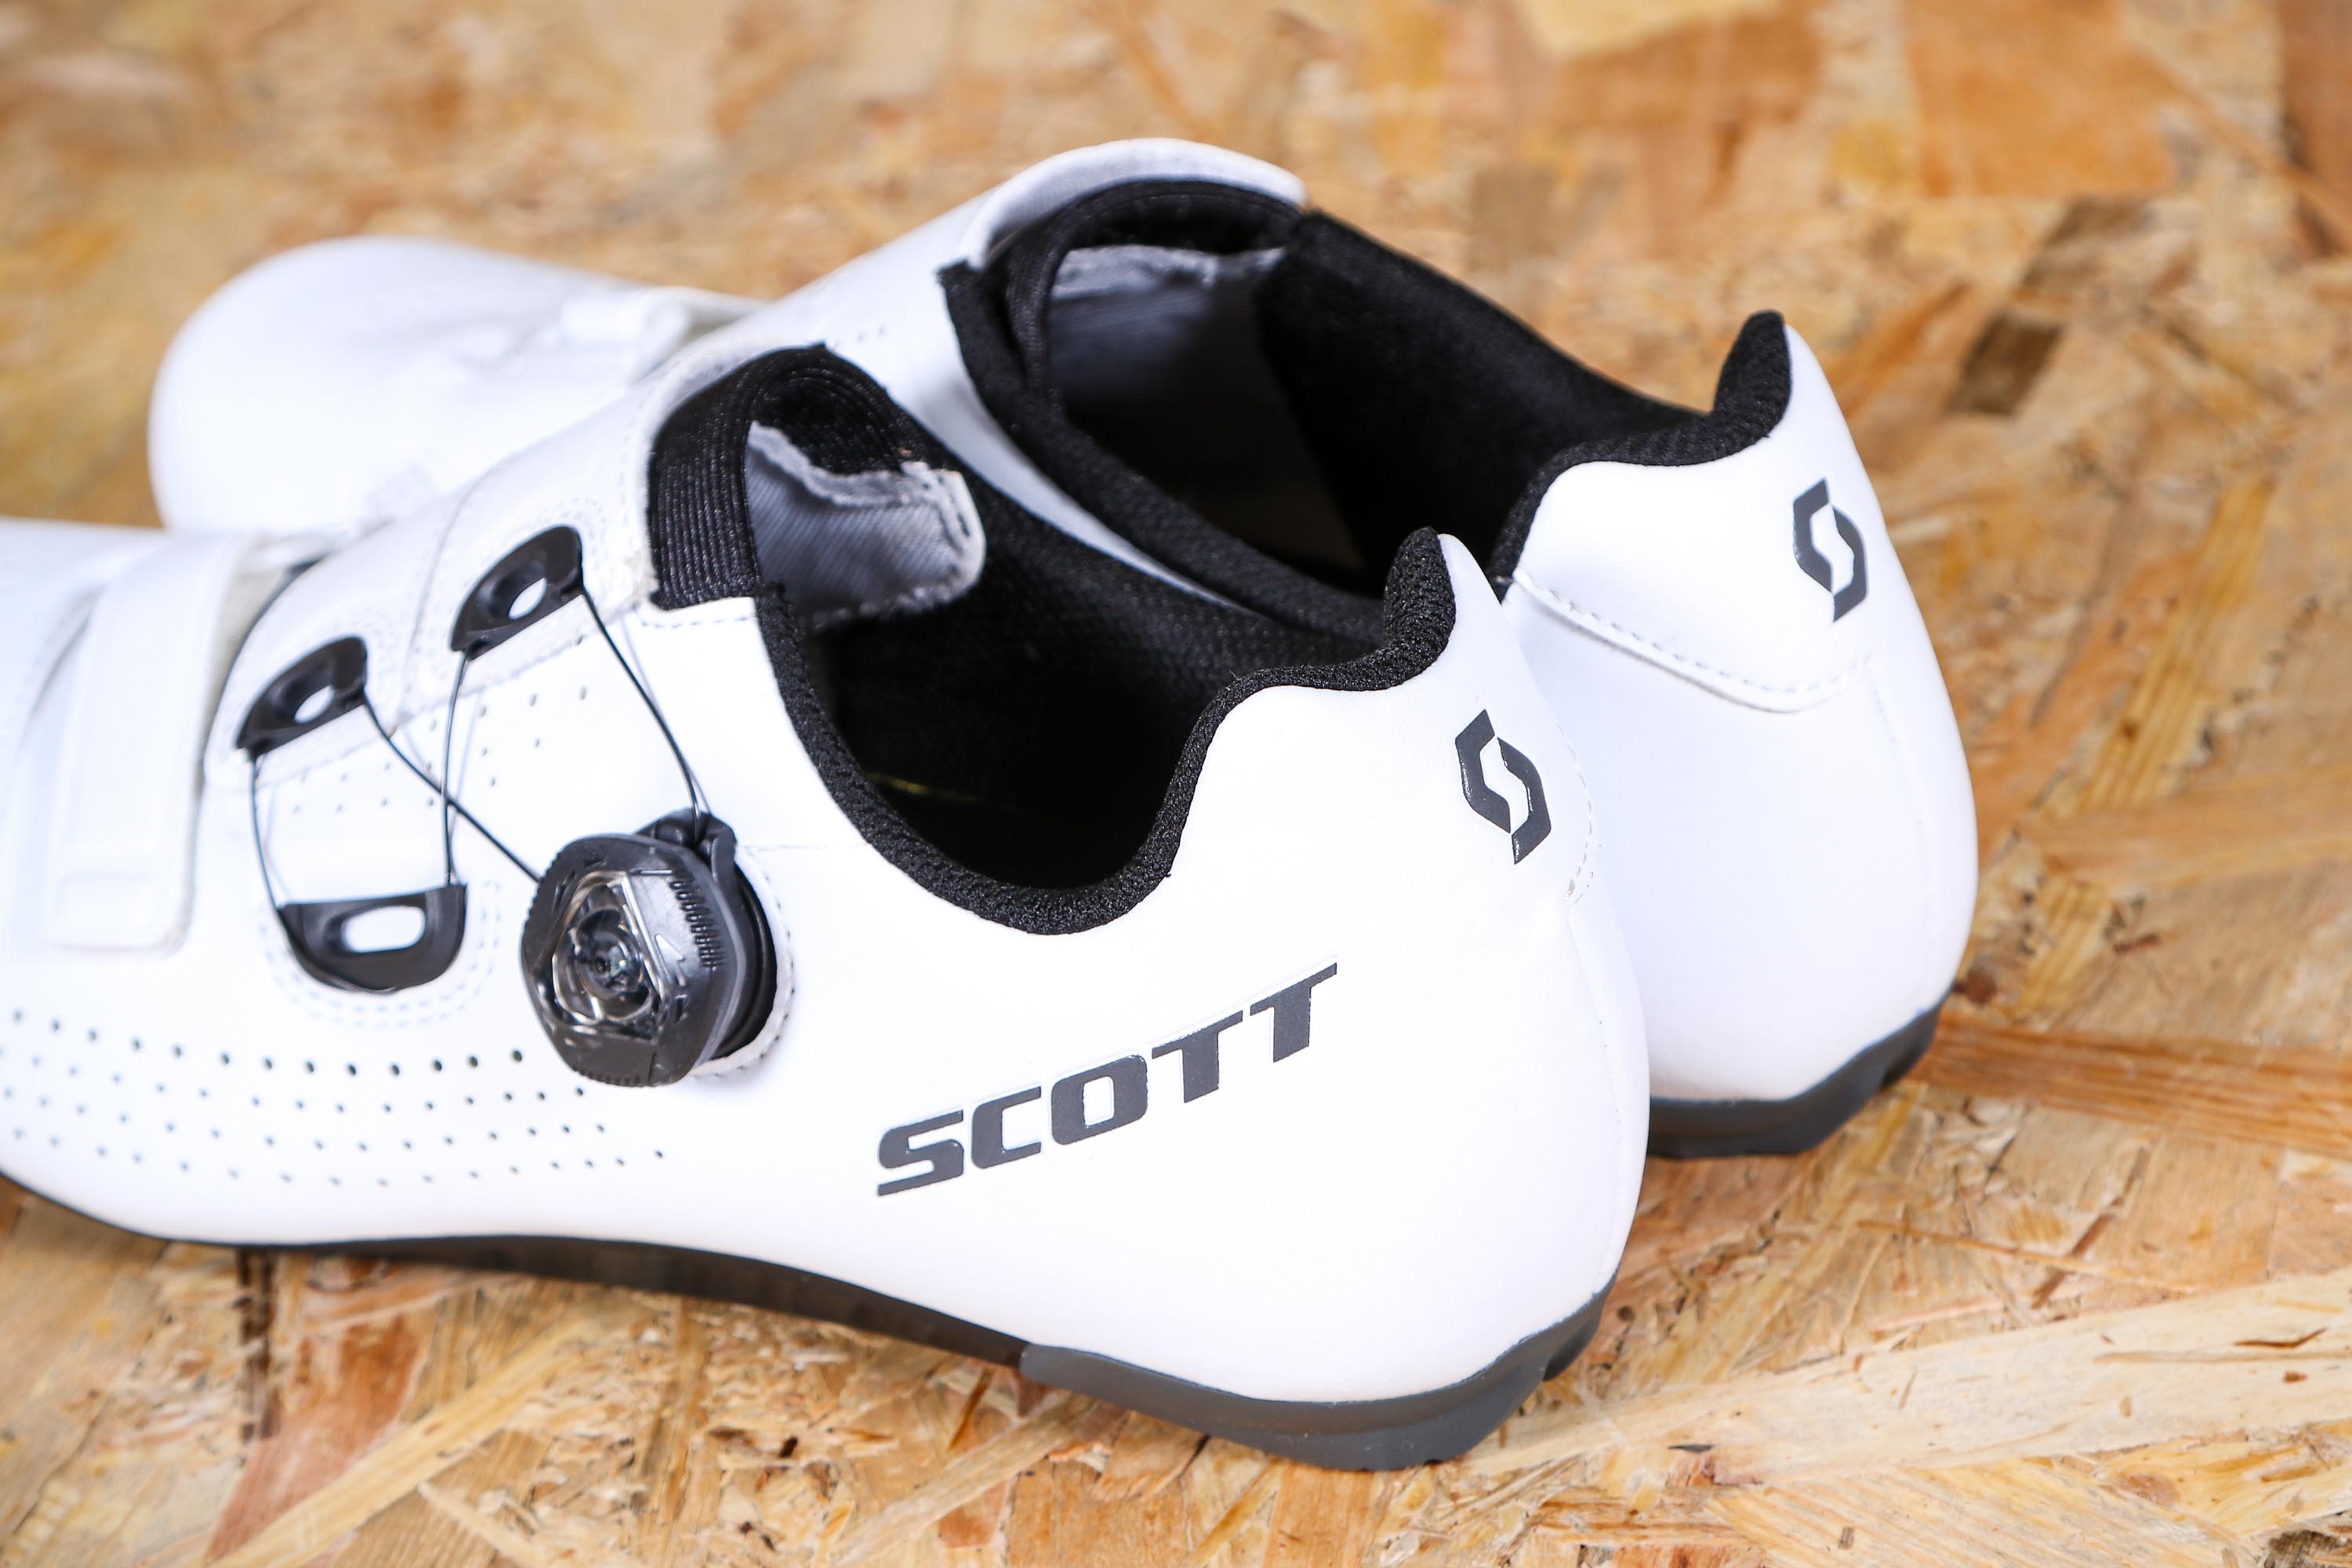 Scott Comp Boa Road Bike Shoes Metallic Blue Men's Size 48 EU 13 US 